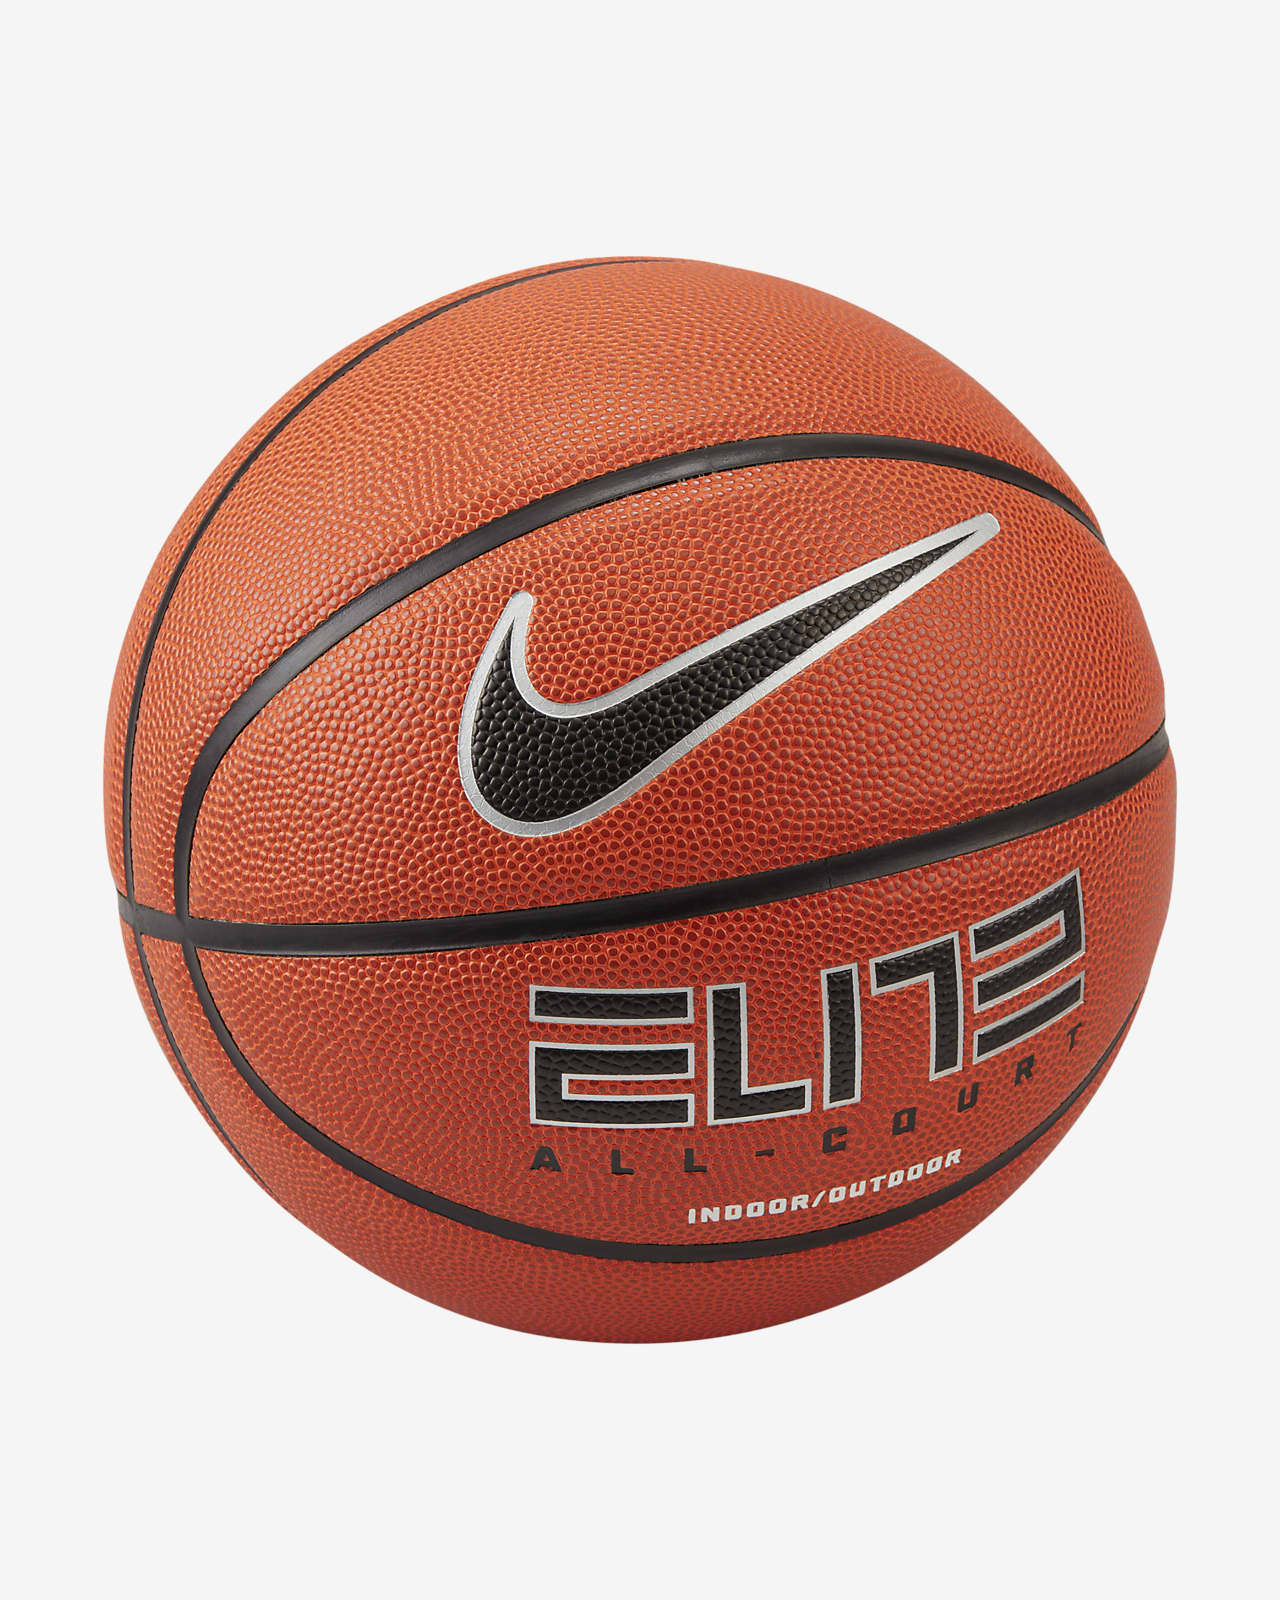 https://static.nike.com/a/images/t_PDP_1280_v1/f_auto,q_auto:eco/54481ba5-09c2-4609-be6e-0065c4a2dca0/elite-all-court-8p-basketball-Gvslv6.png